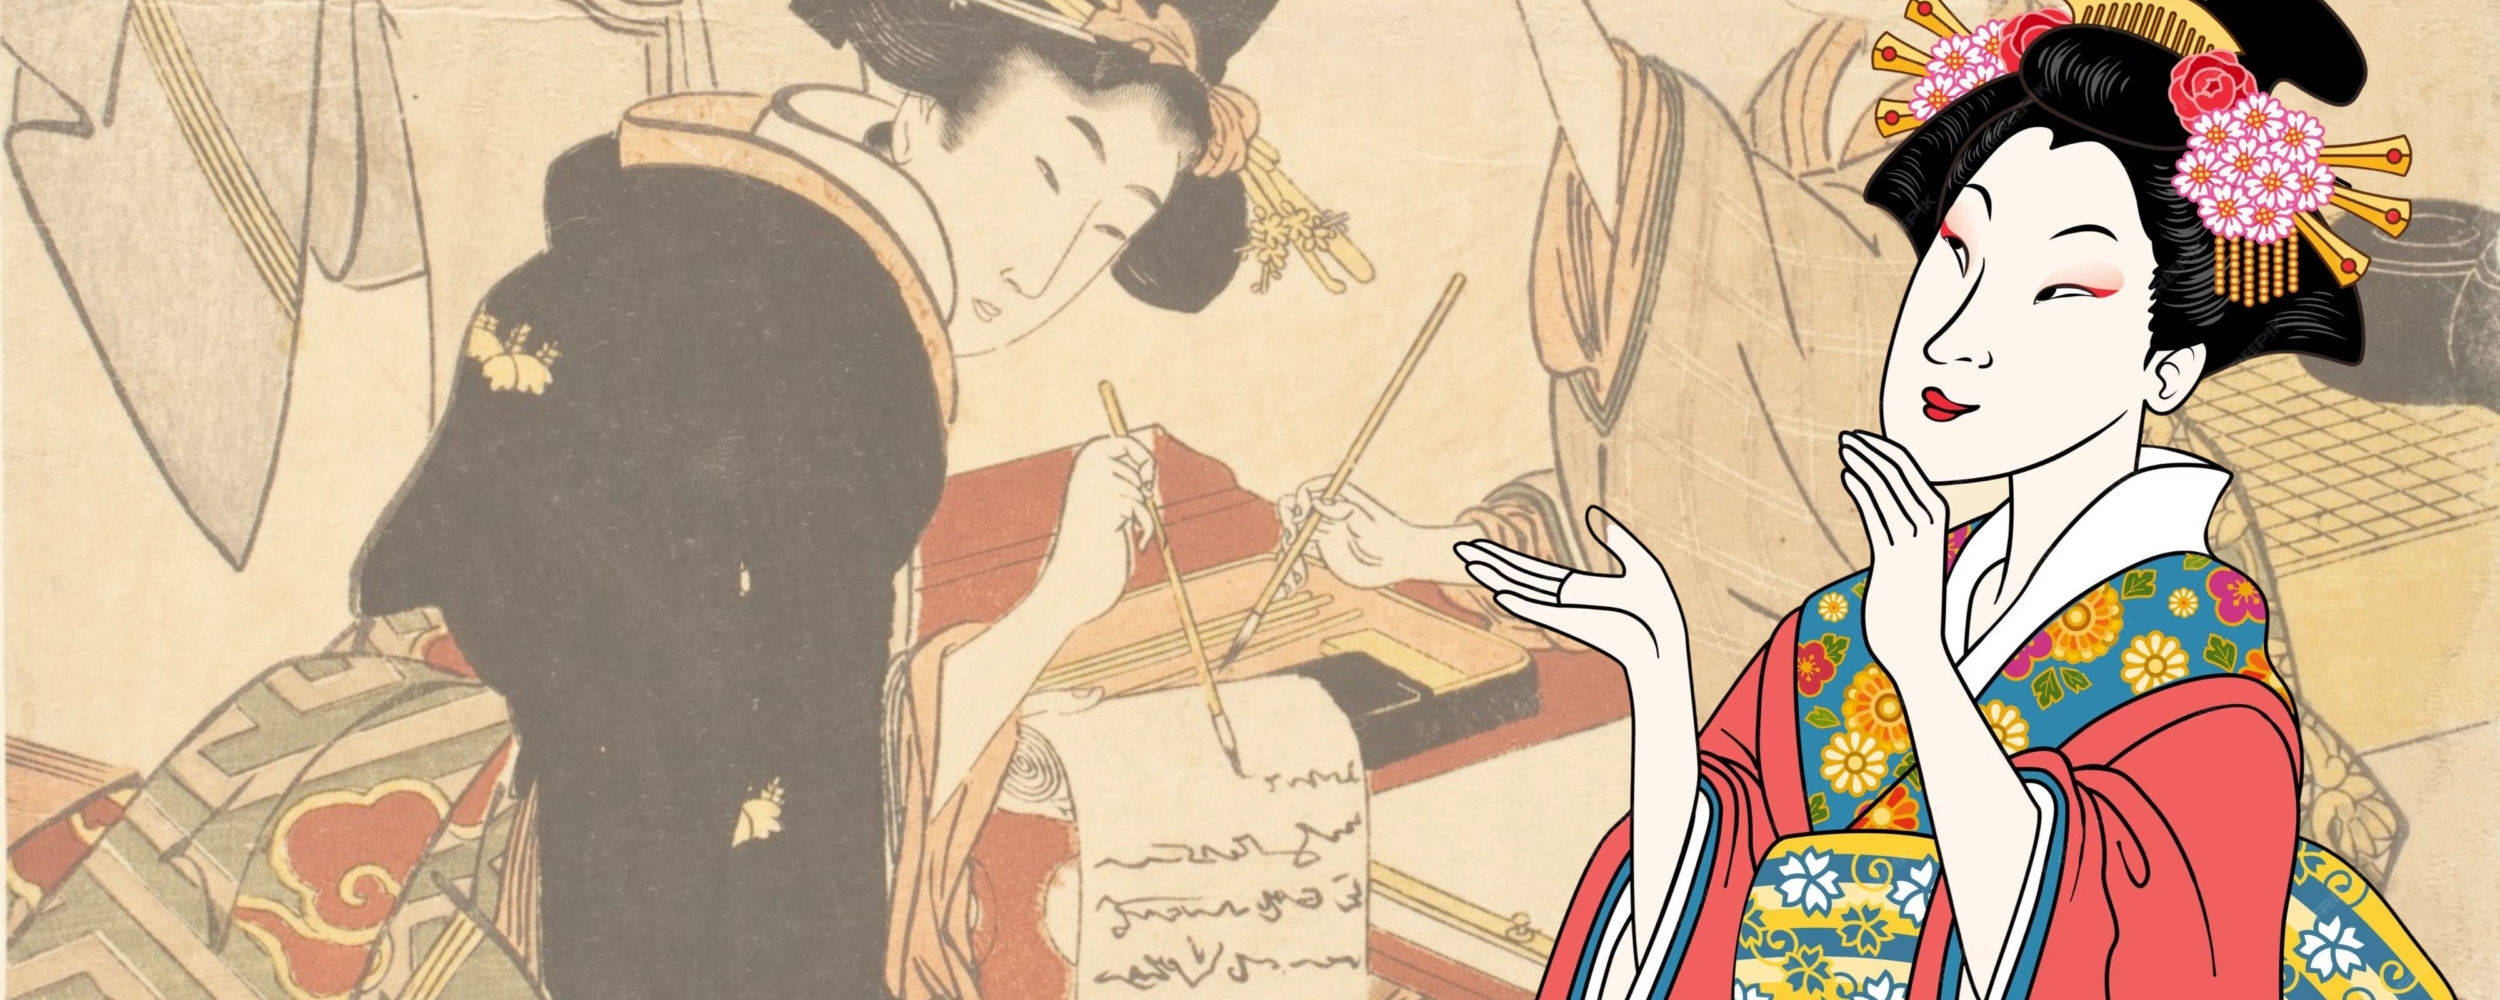 Educatie Van kimono tot kalligrafie 1